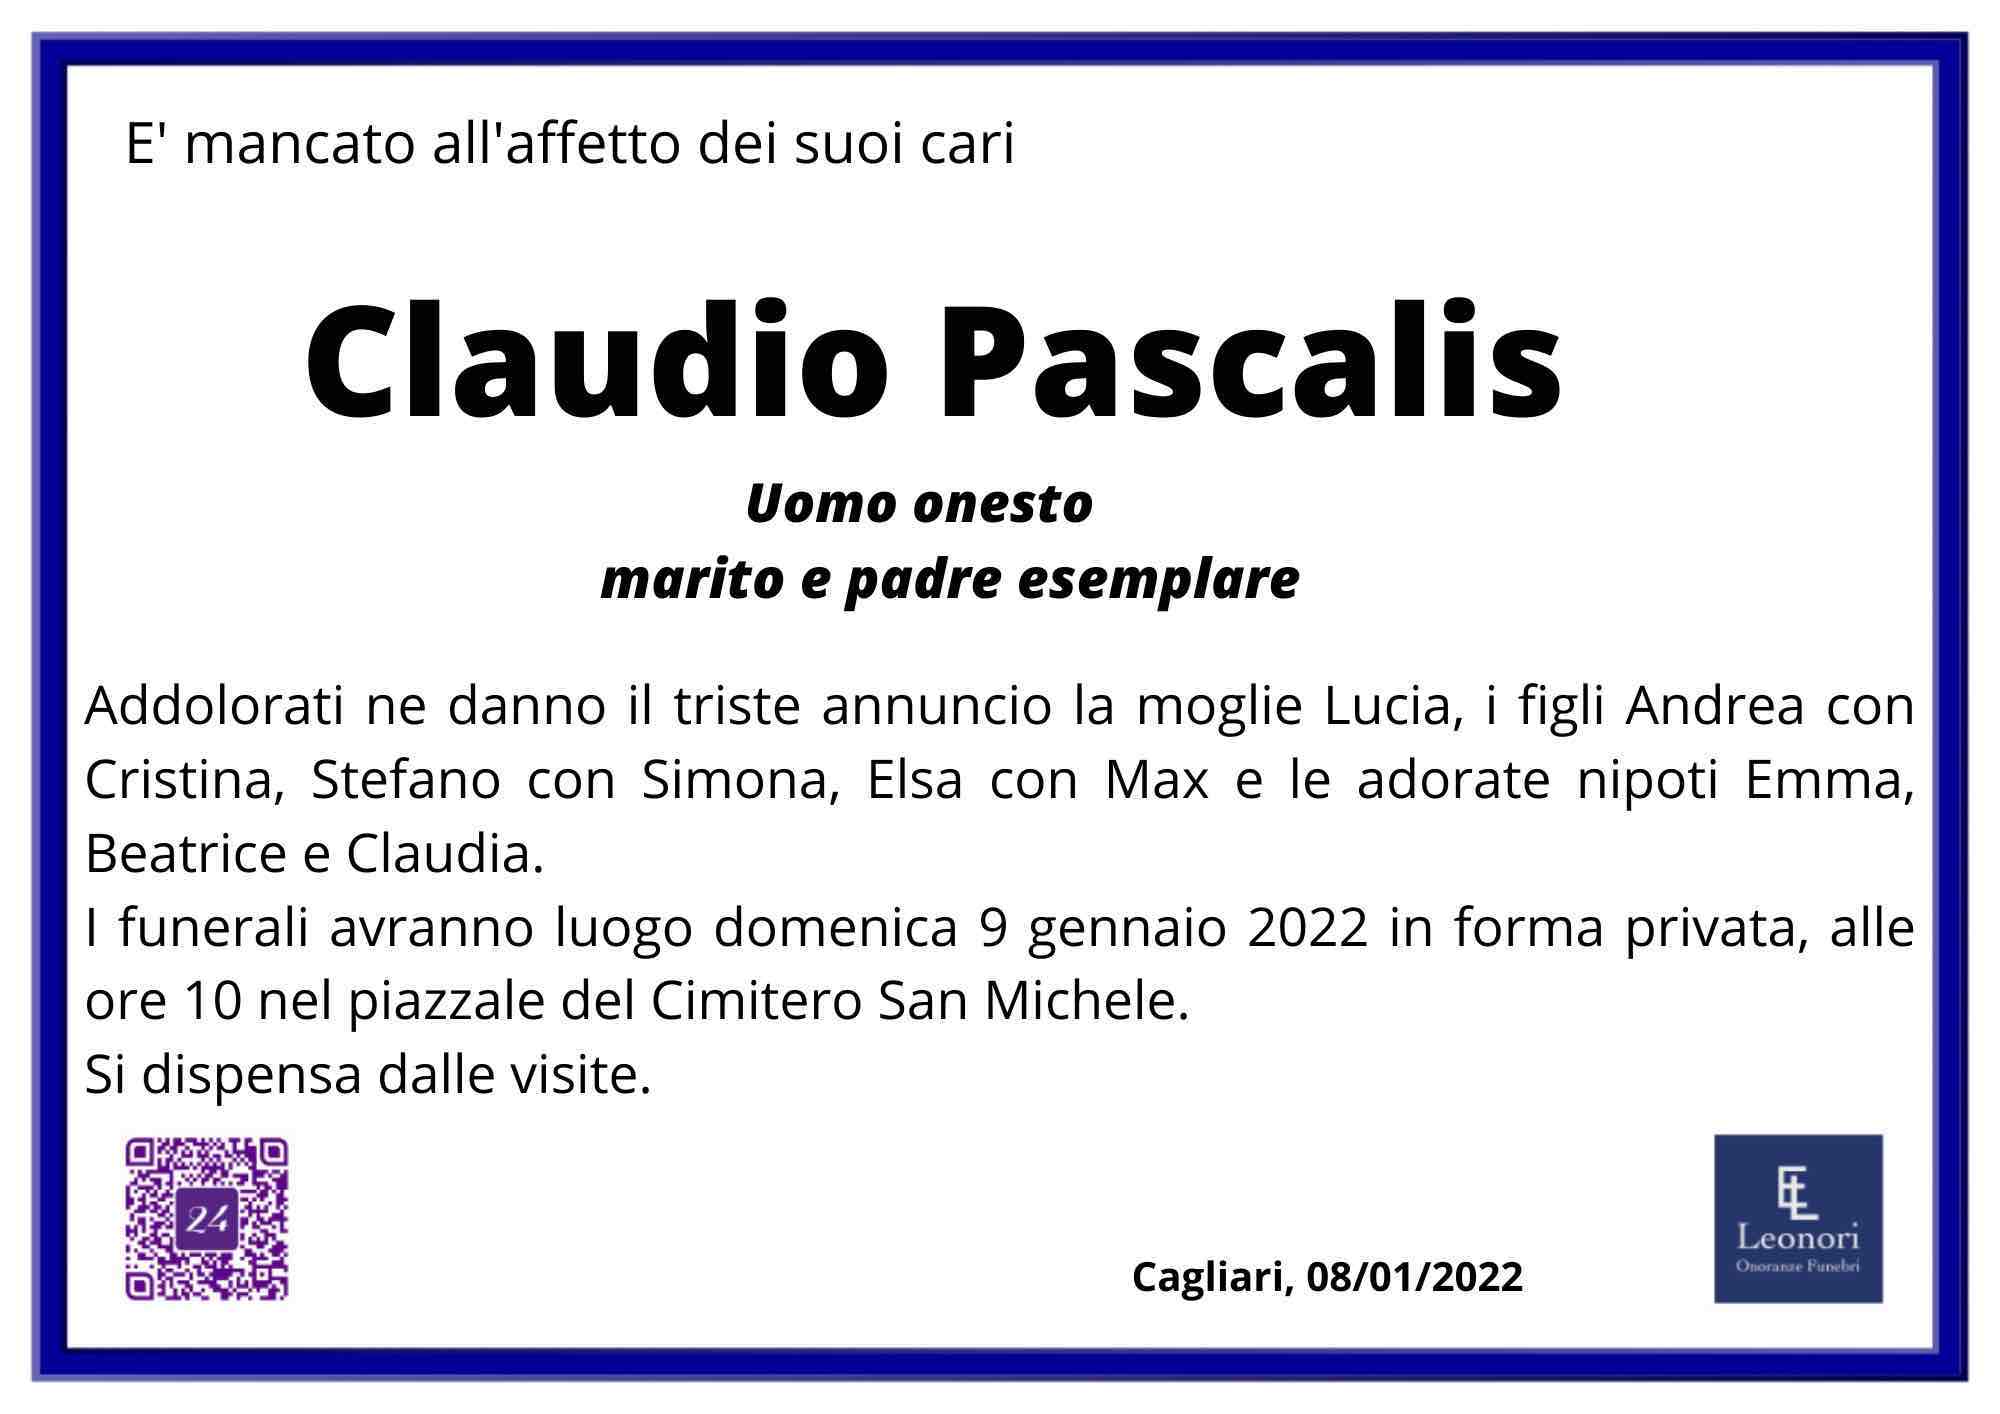 Claudio Pascalis